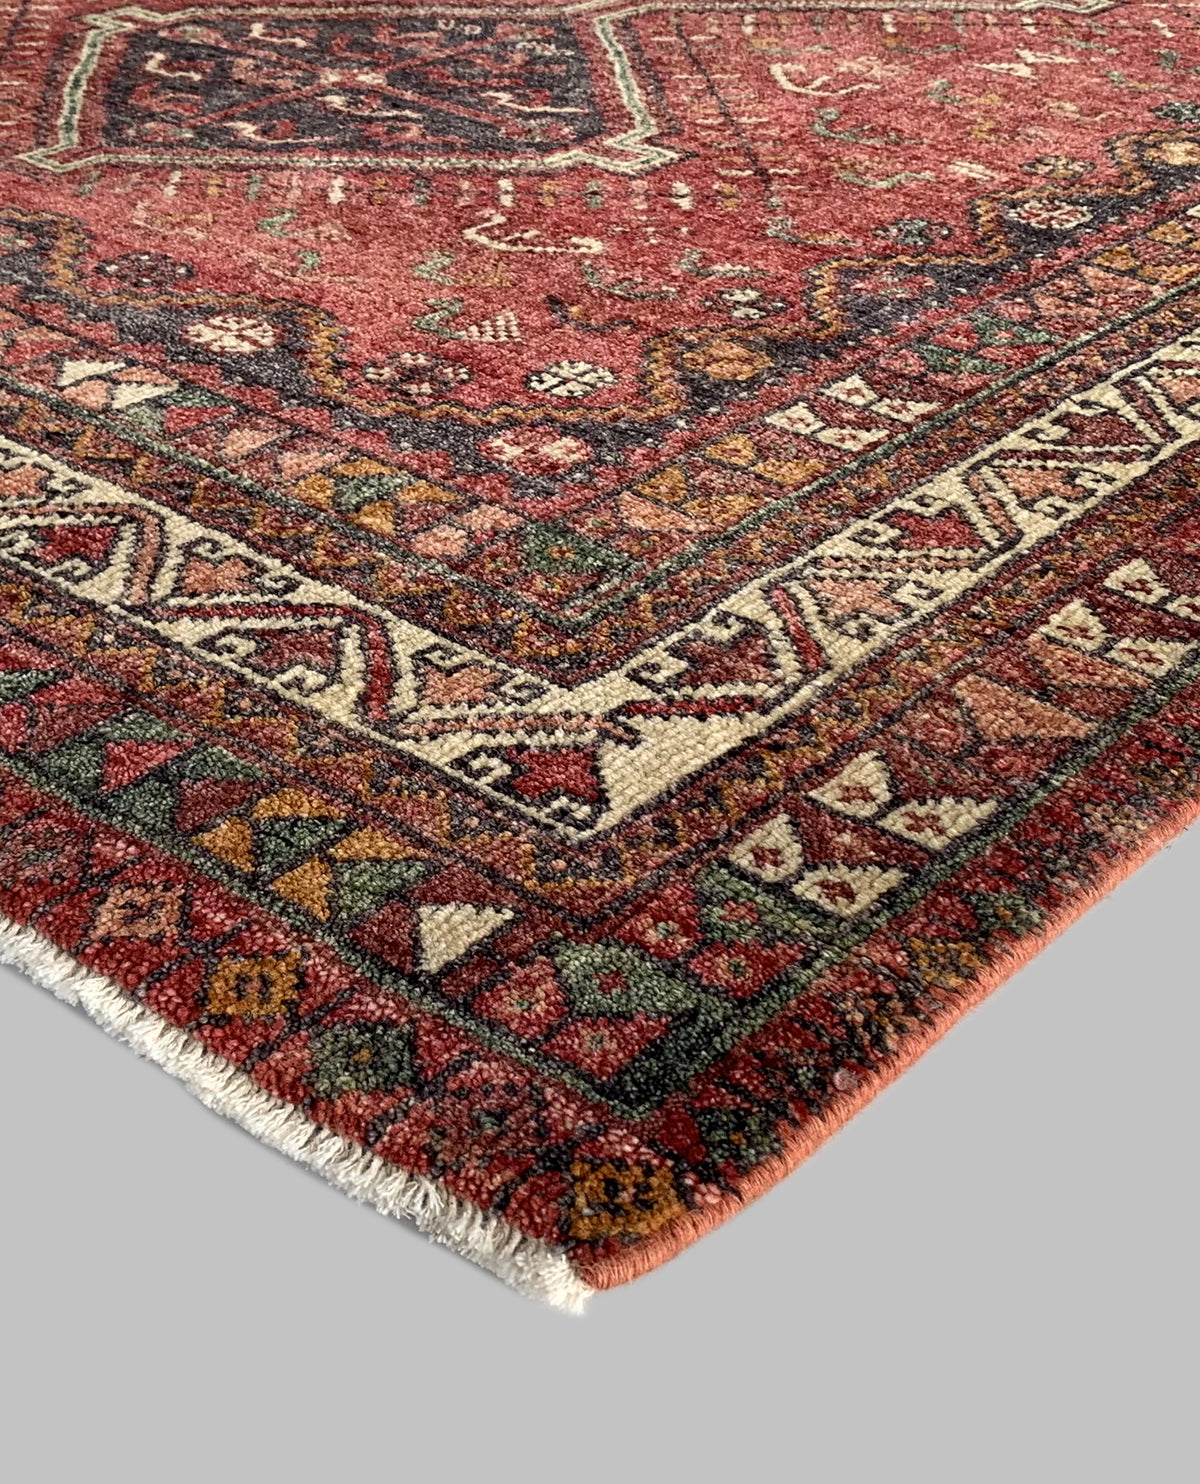 Rugslane Hand knotted Classic Kazak  Design Persian Weave Red Modern Carpet 5.7ft X 8.4ft